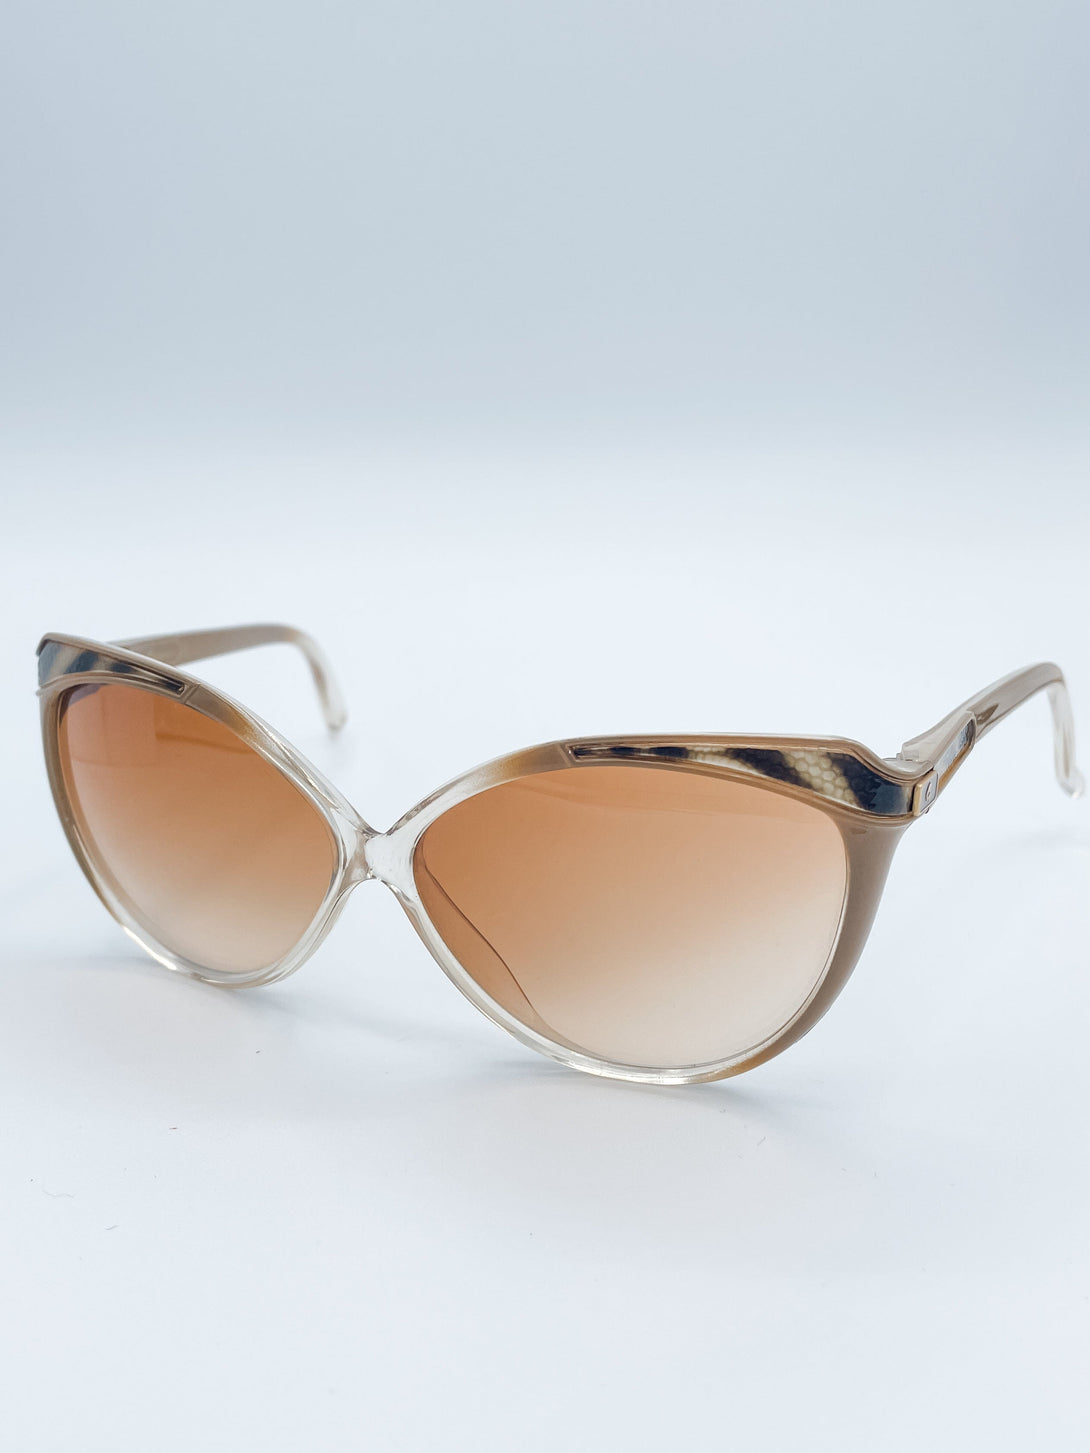 Women's Vintage Cat's Eye Shaped Sunglasses